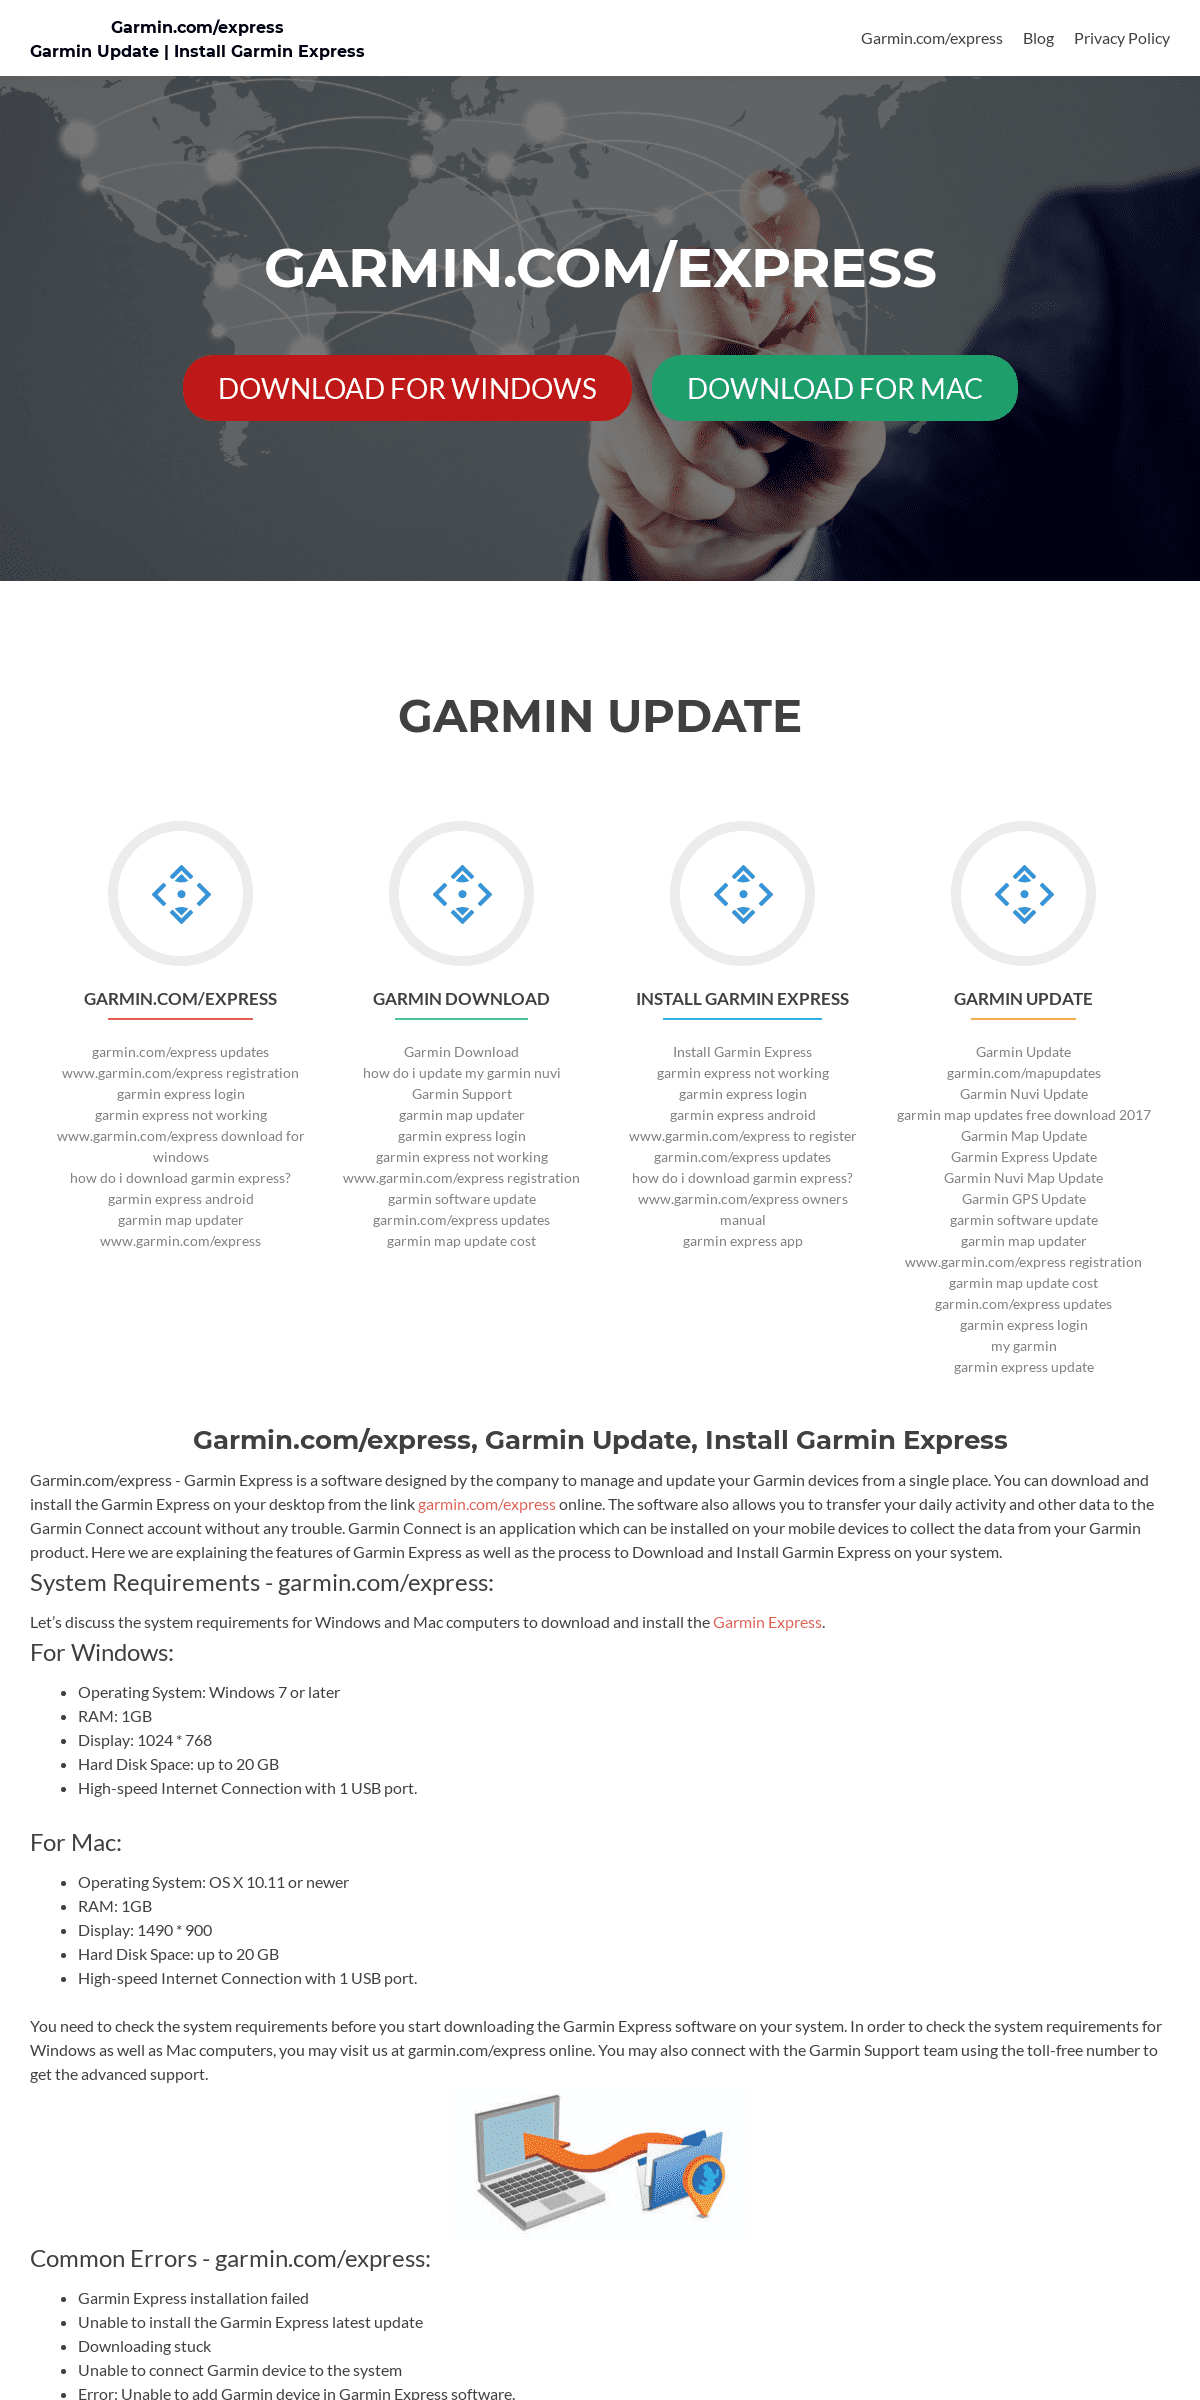 A complete backup of garmincomexpress.com.au